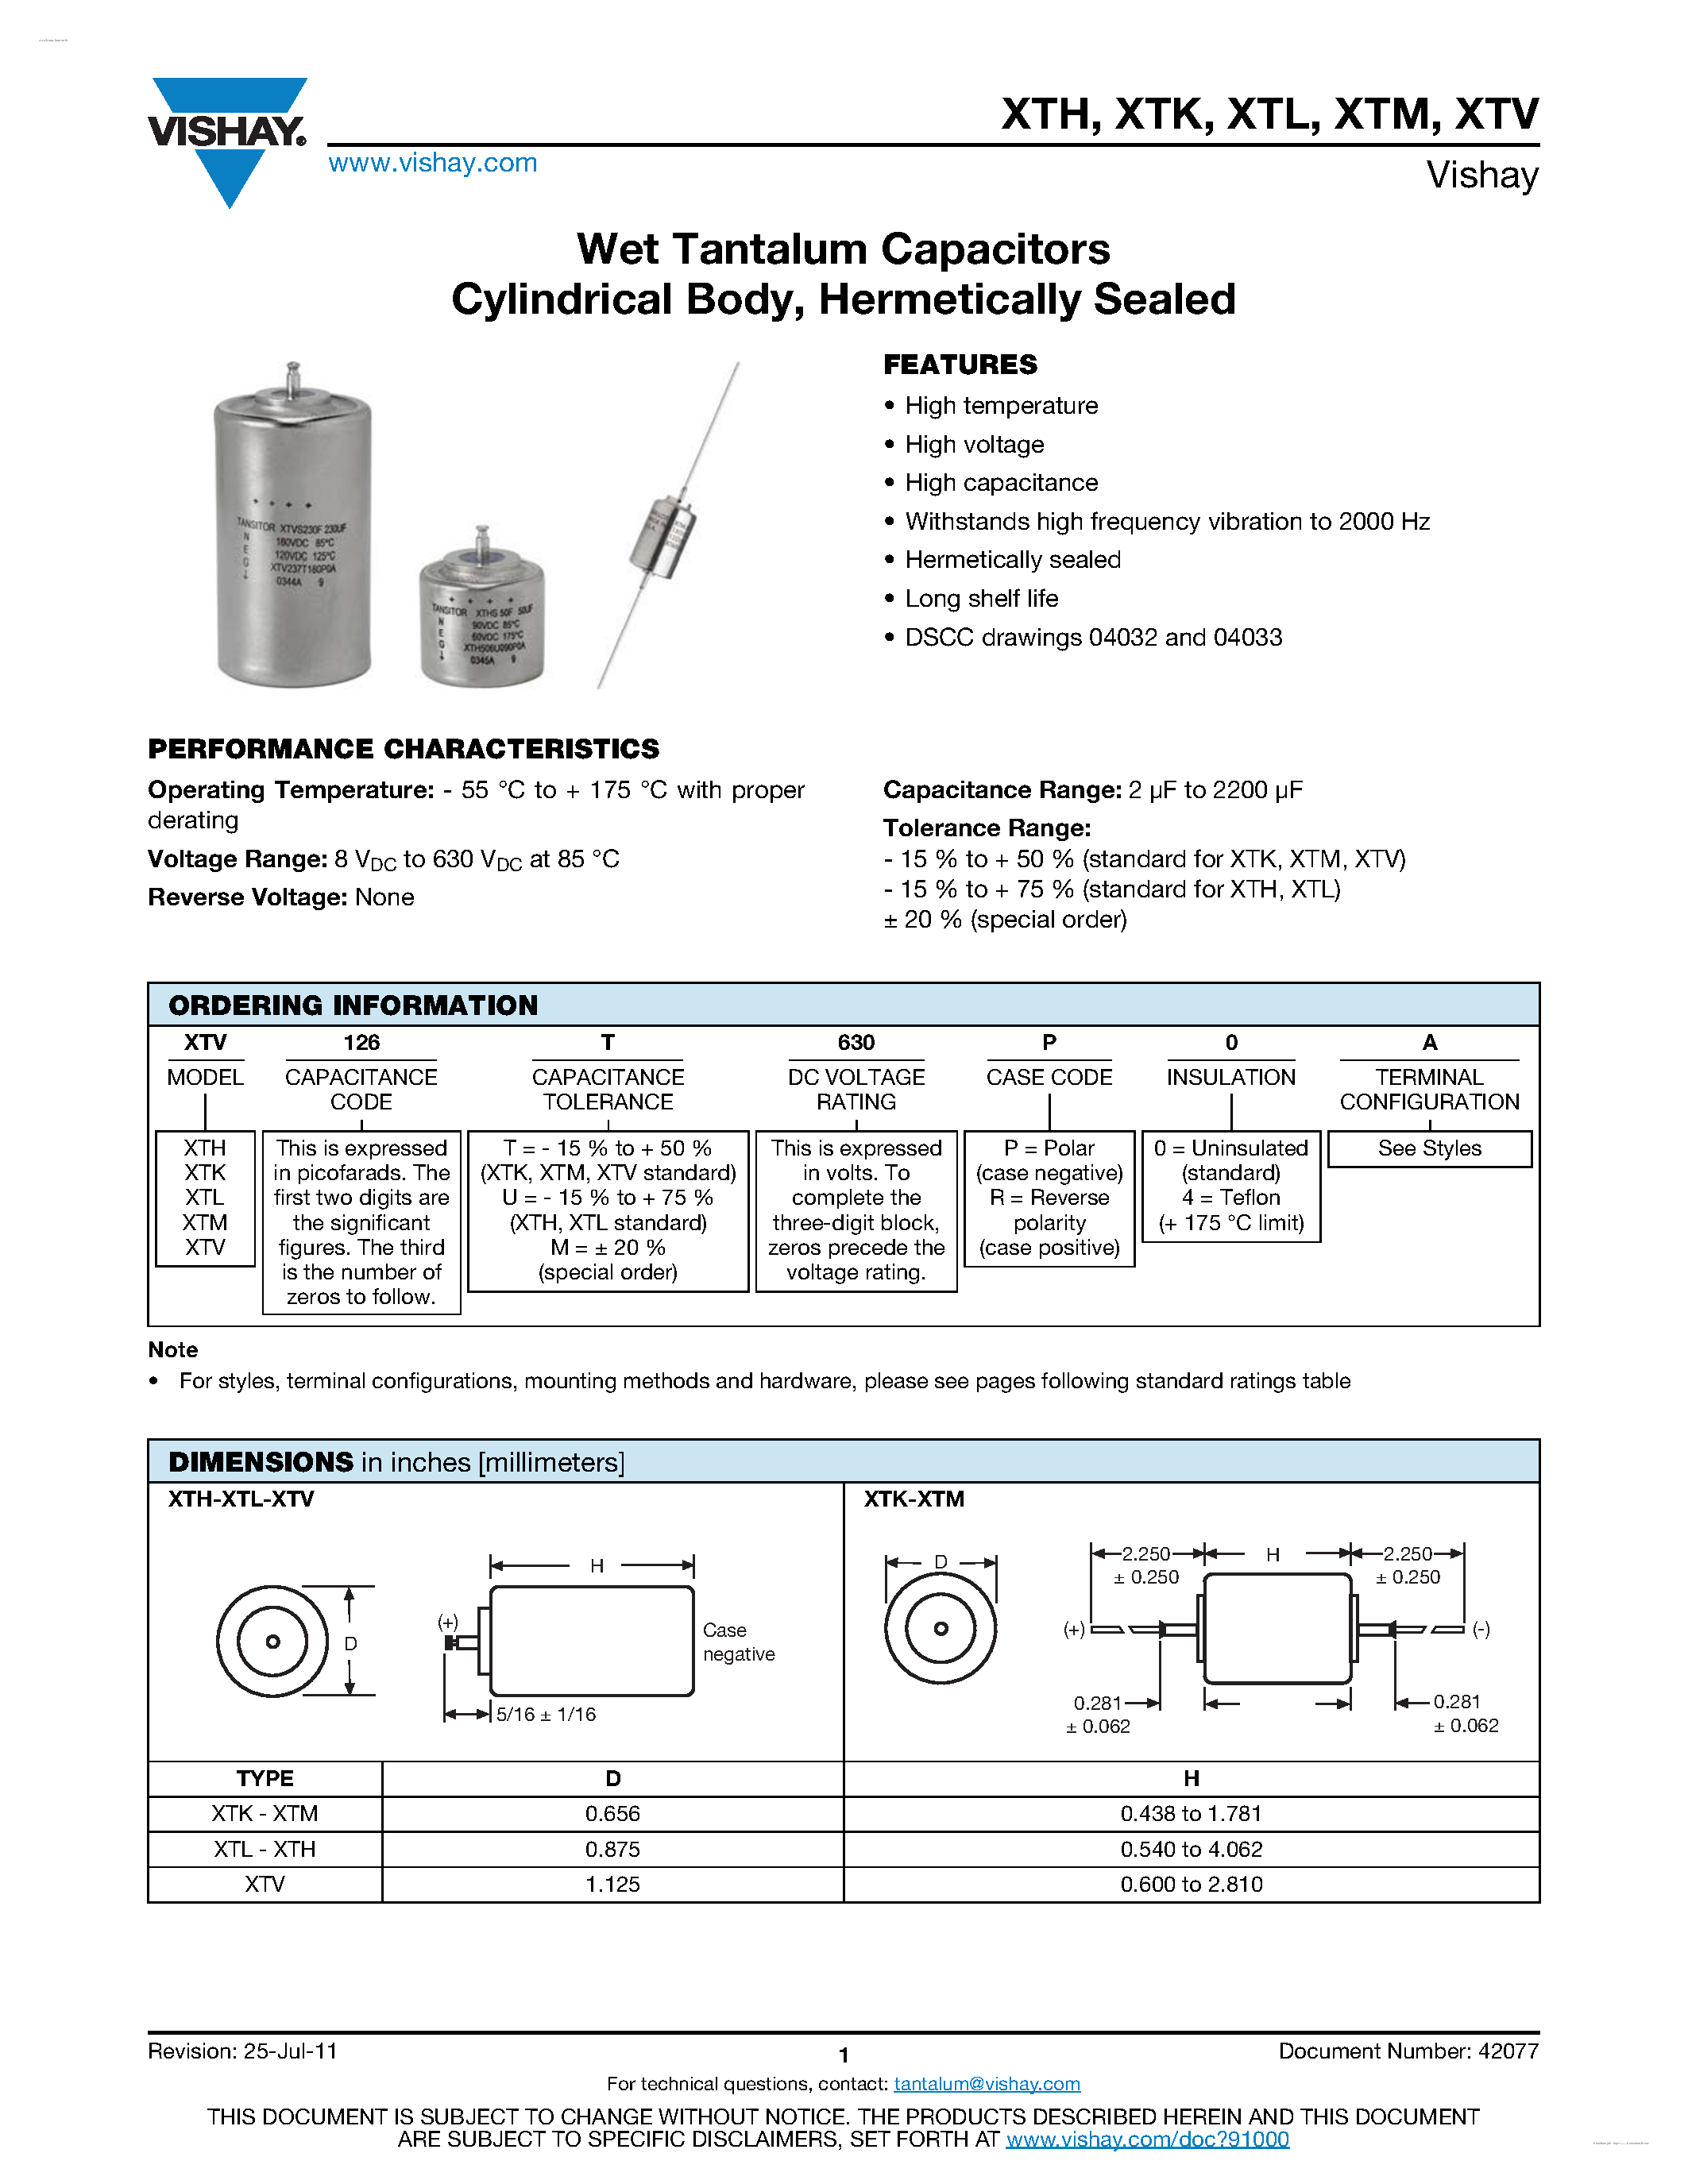 Datasheet XTK - Wet Tantalum Capacitors page 1